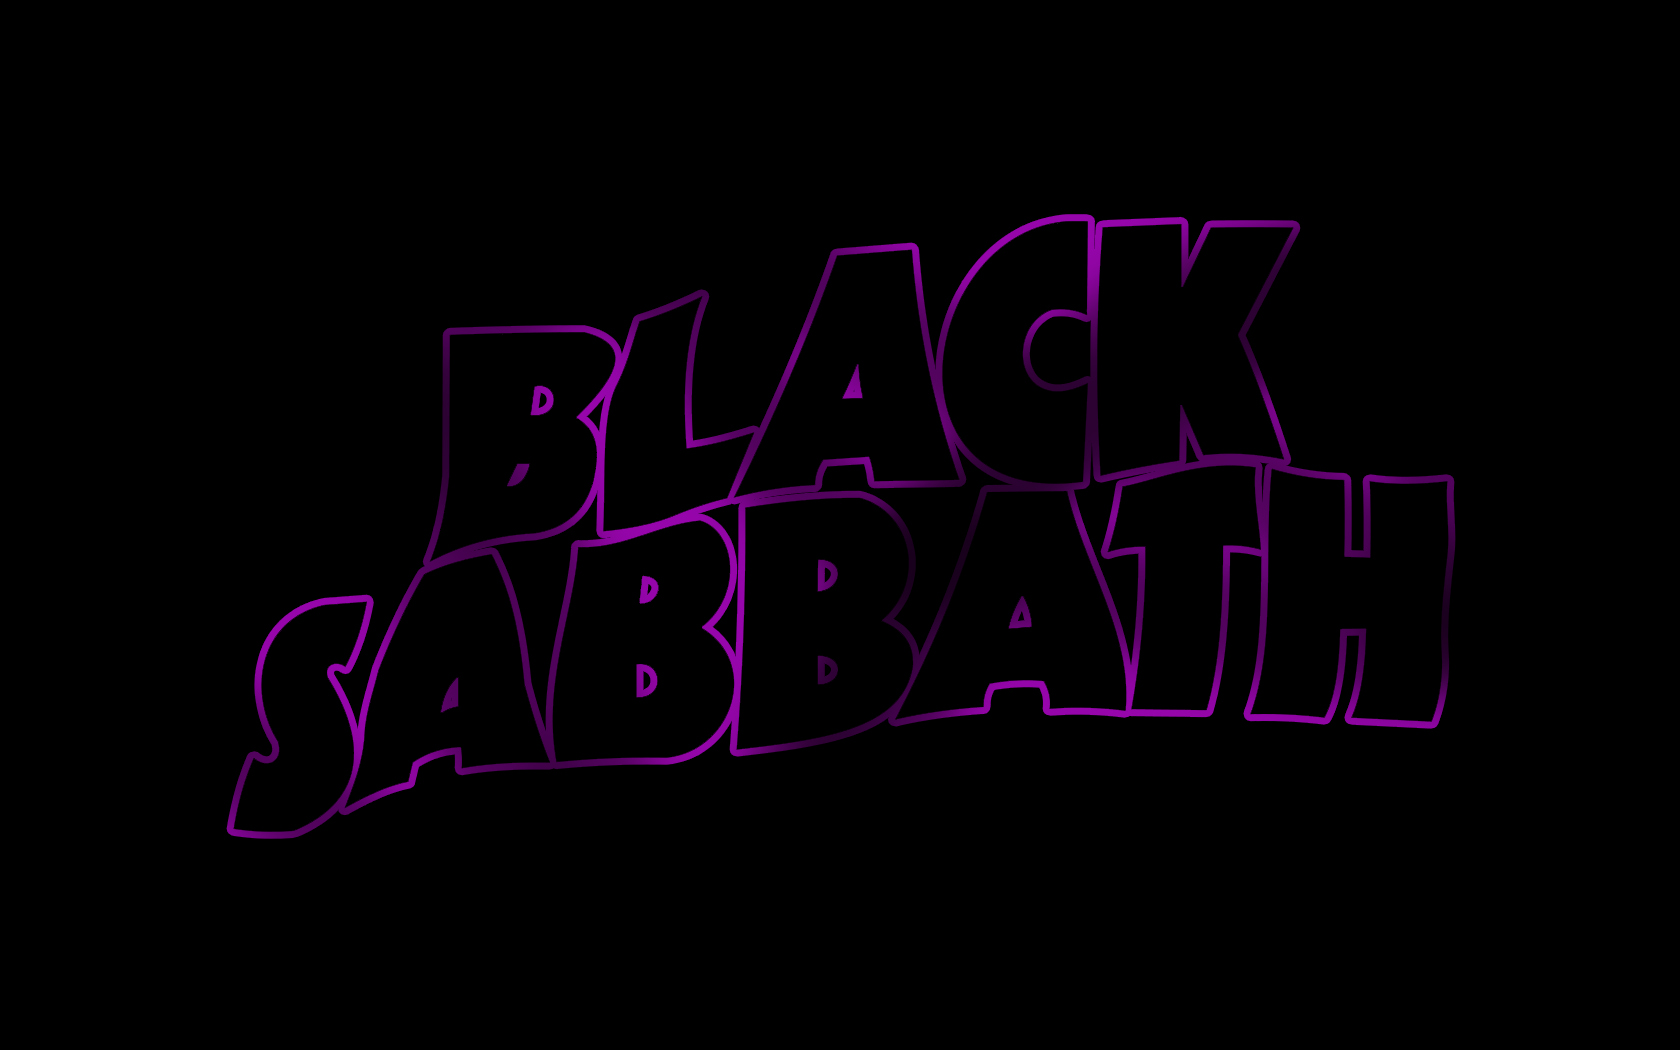 Black Sabbath Wallpapers